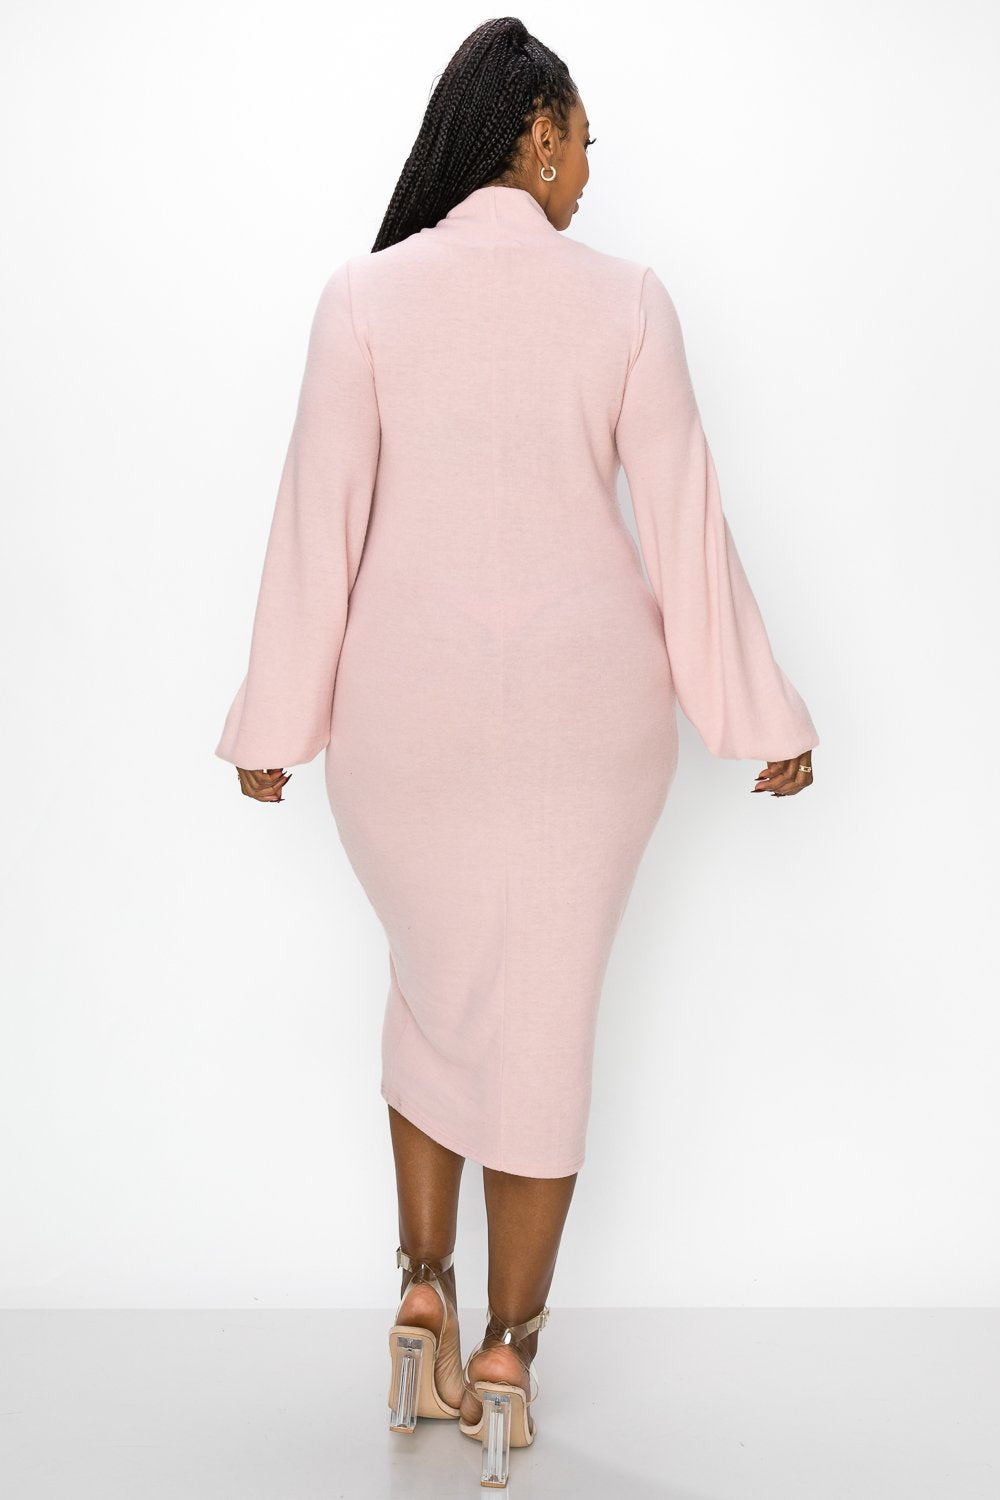 livd L I V D women's contemporary plus size boutique hacci knit sweater dress in pale pink